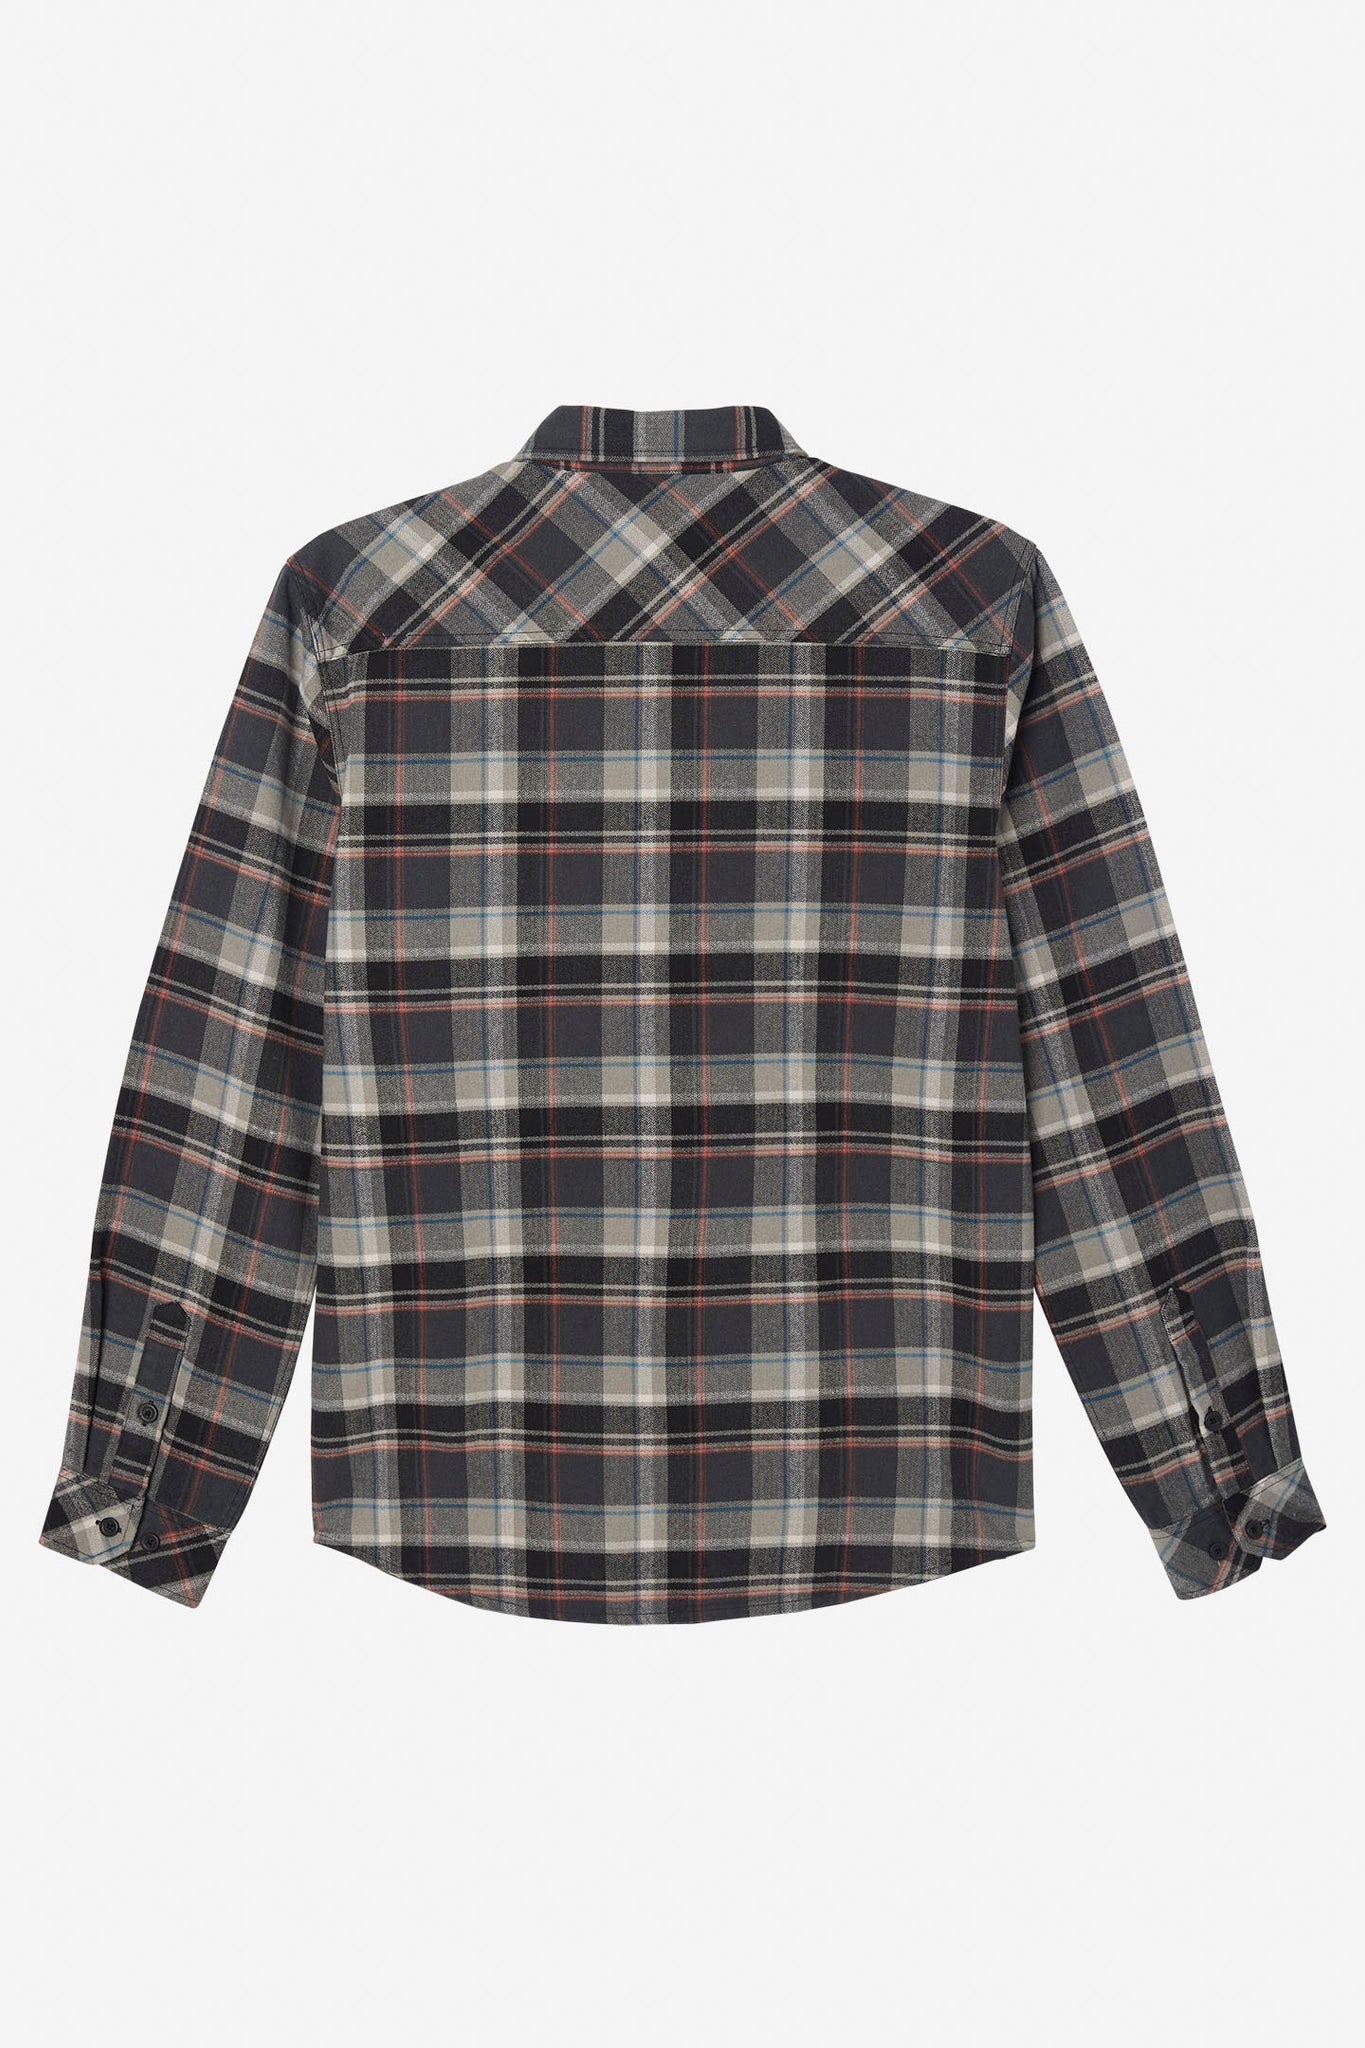 Buy siliteelon Boys Buffalo Plaid Flannel Shirt, Long Sleeve